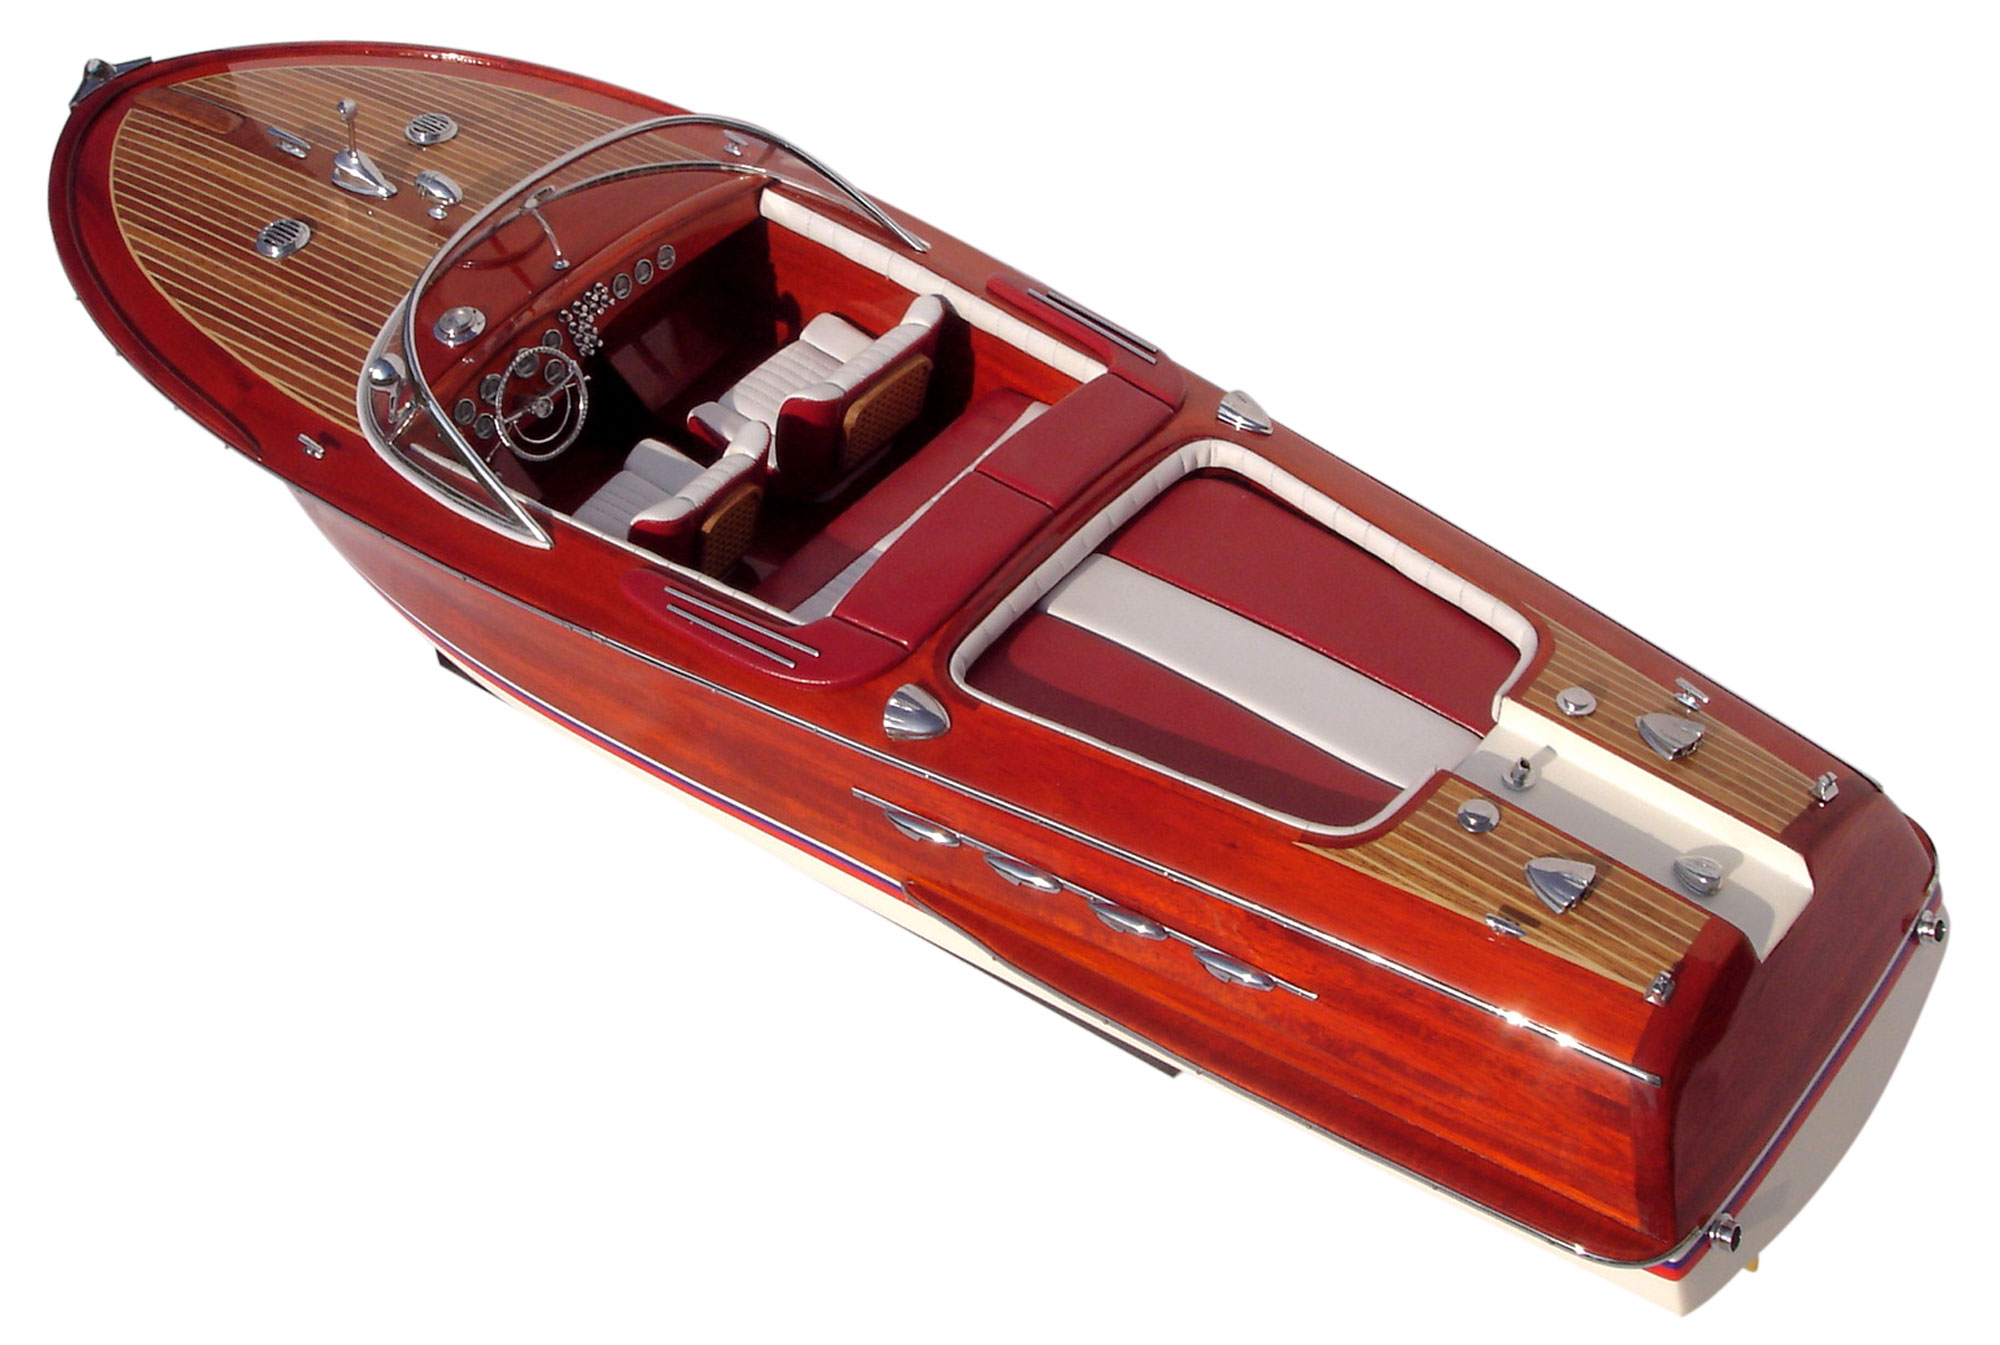 Classic Boat Riva Aquarama Red Model Lenght 87